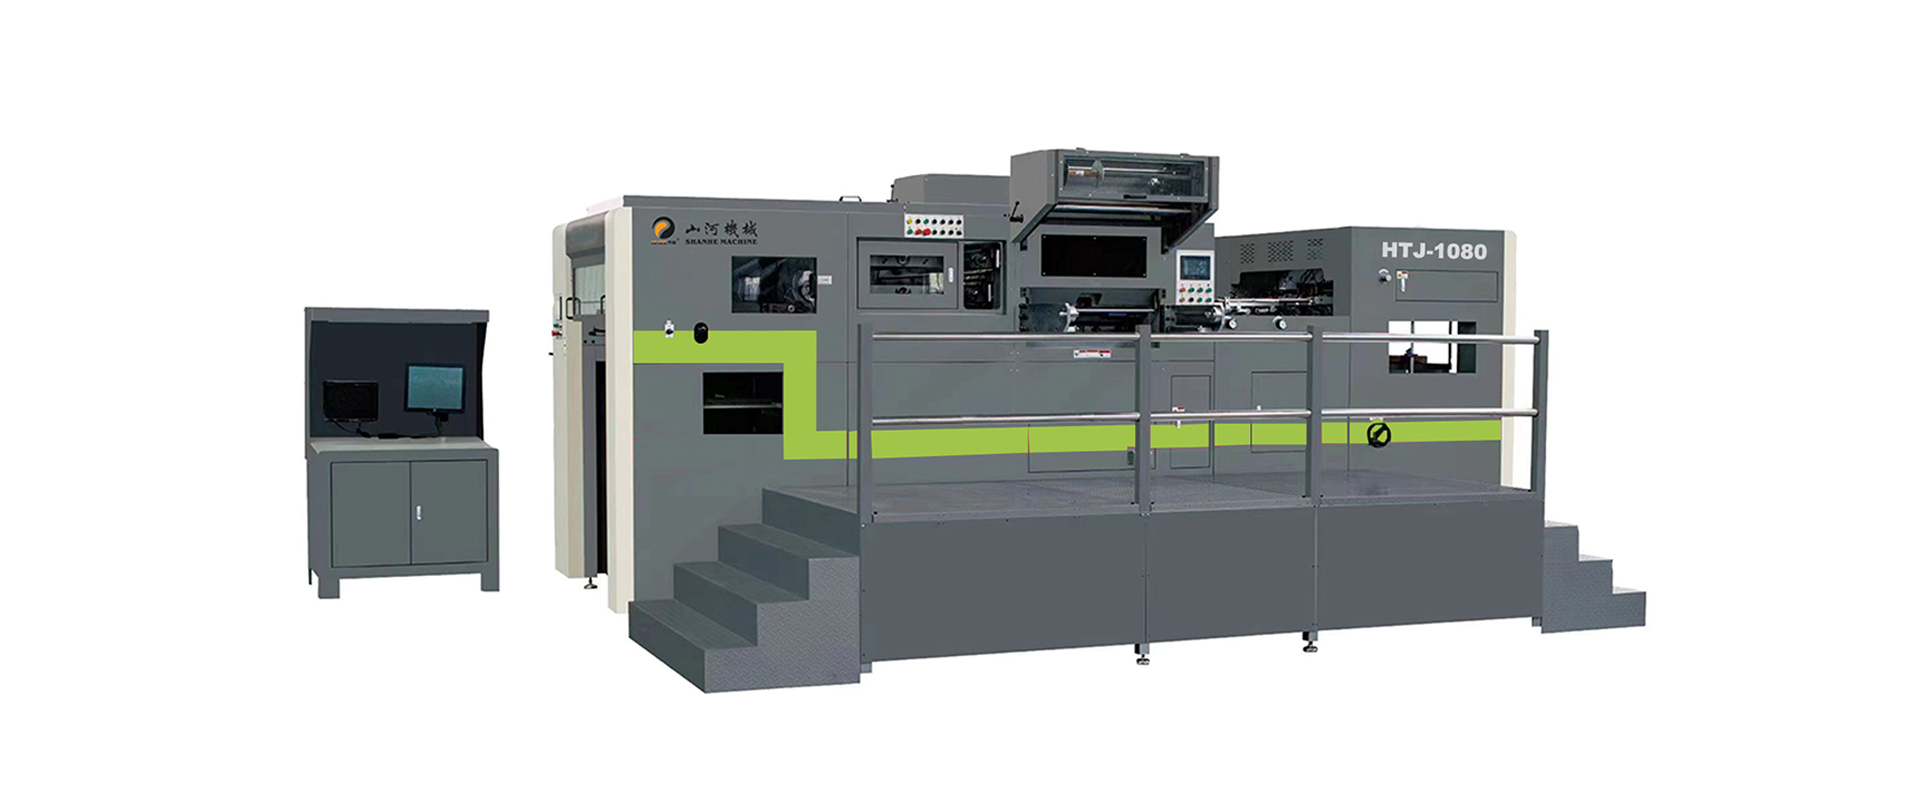 HTJ-1080 Automatic Hot Stamping Machine3